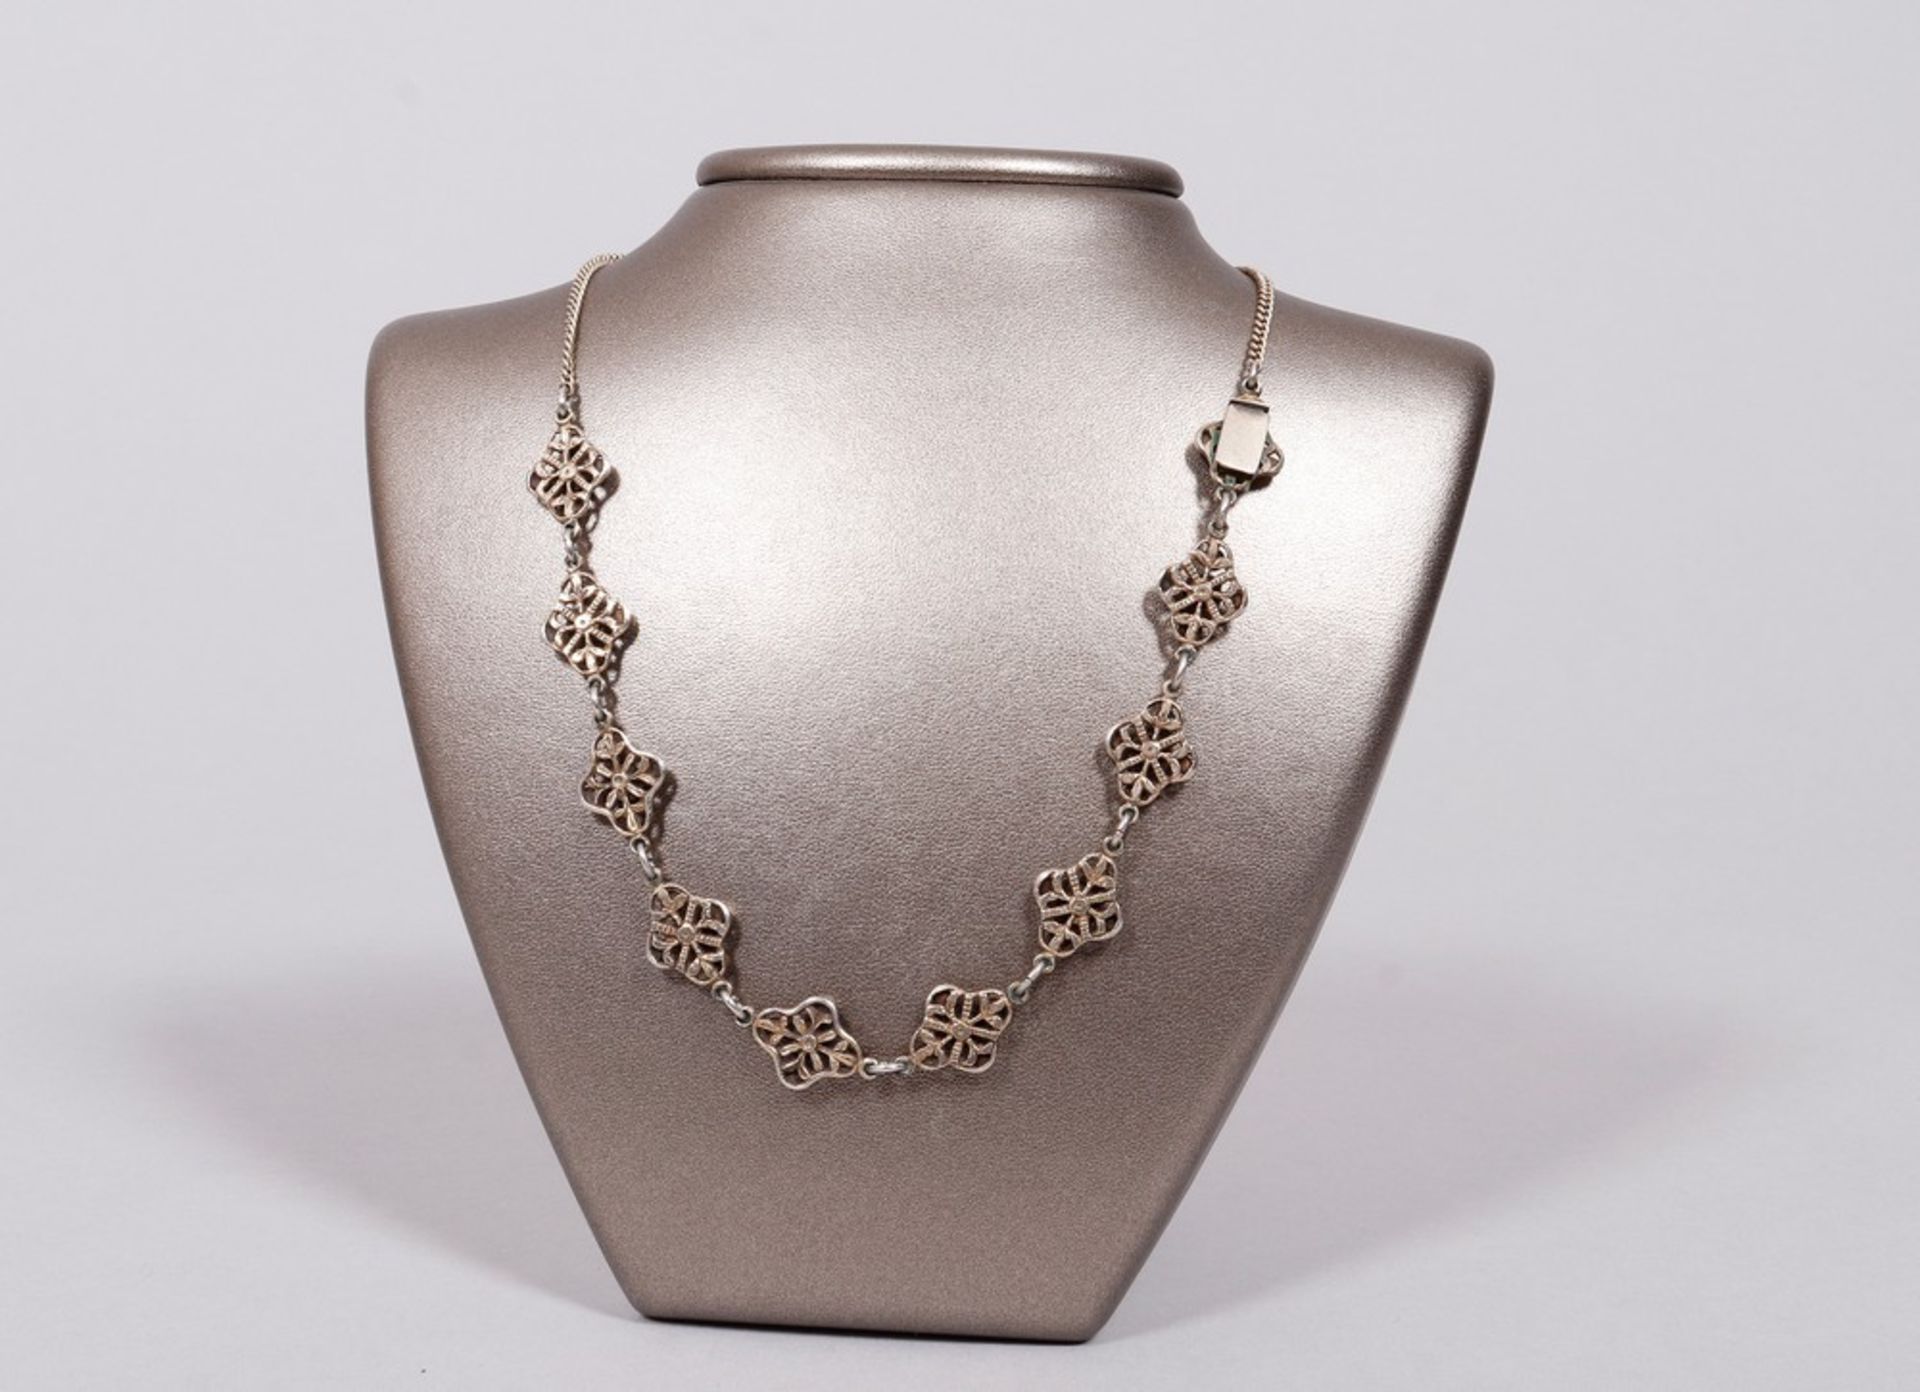 Art Deco necklace, 800 silver, Austria, around 1920/30 - Image 3 of 4